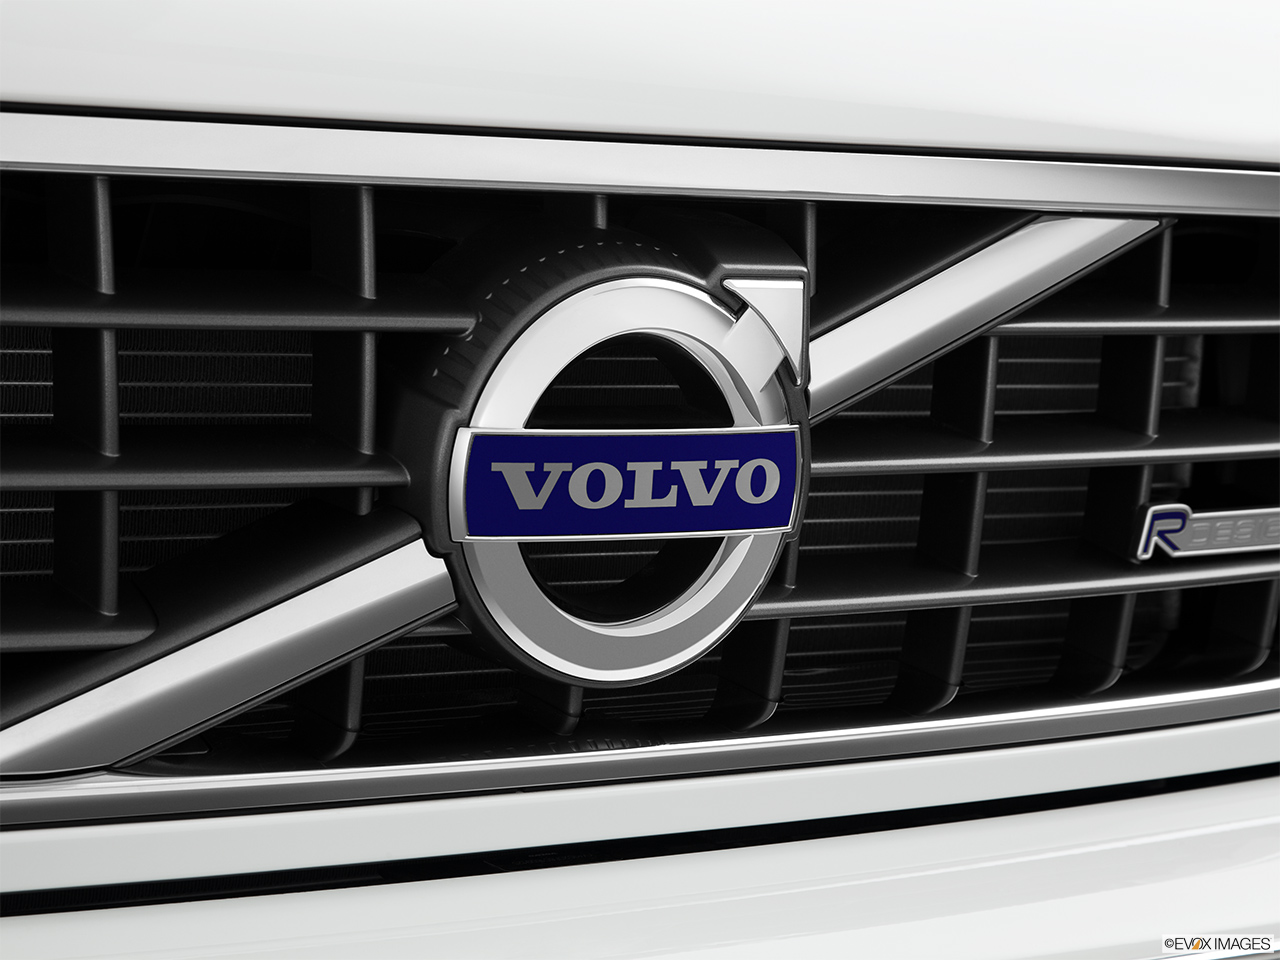 2012 Volvo XC90 R-Design Rear manufacture badge/emblem 